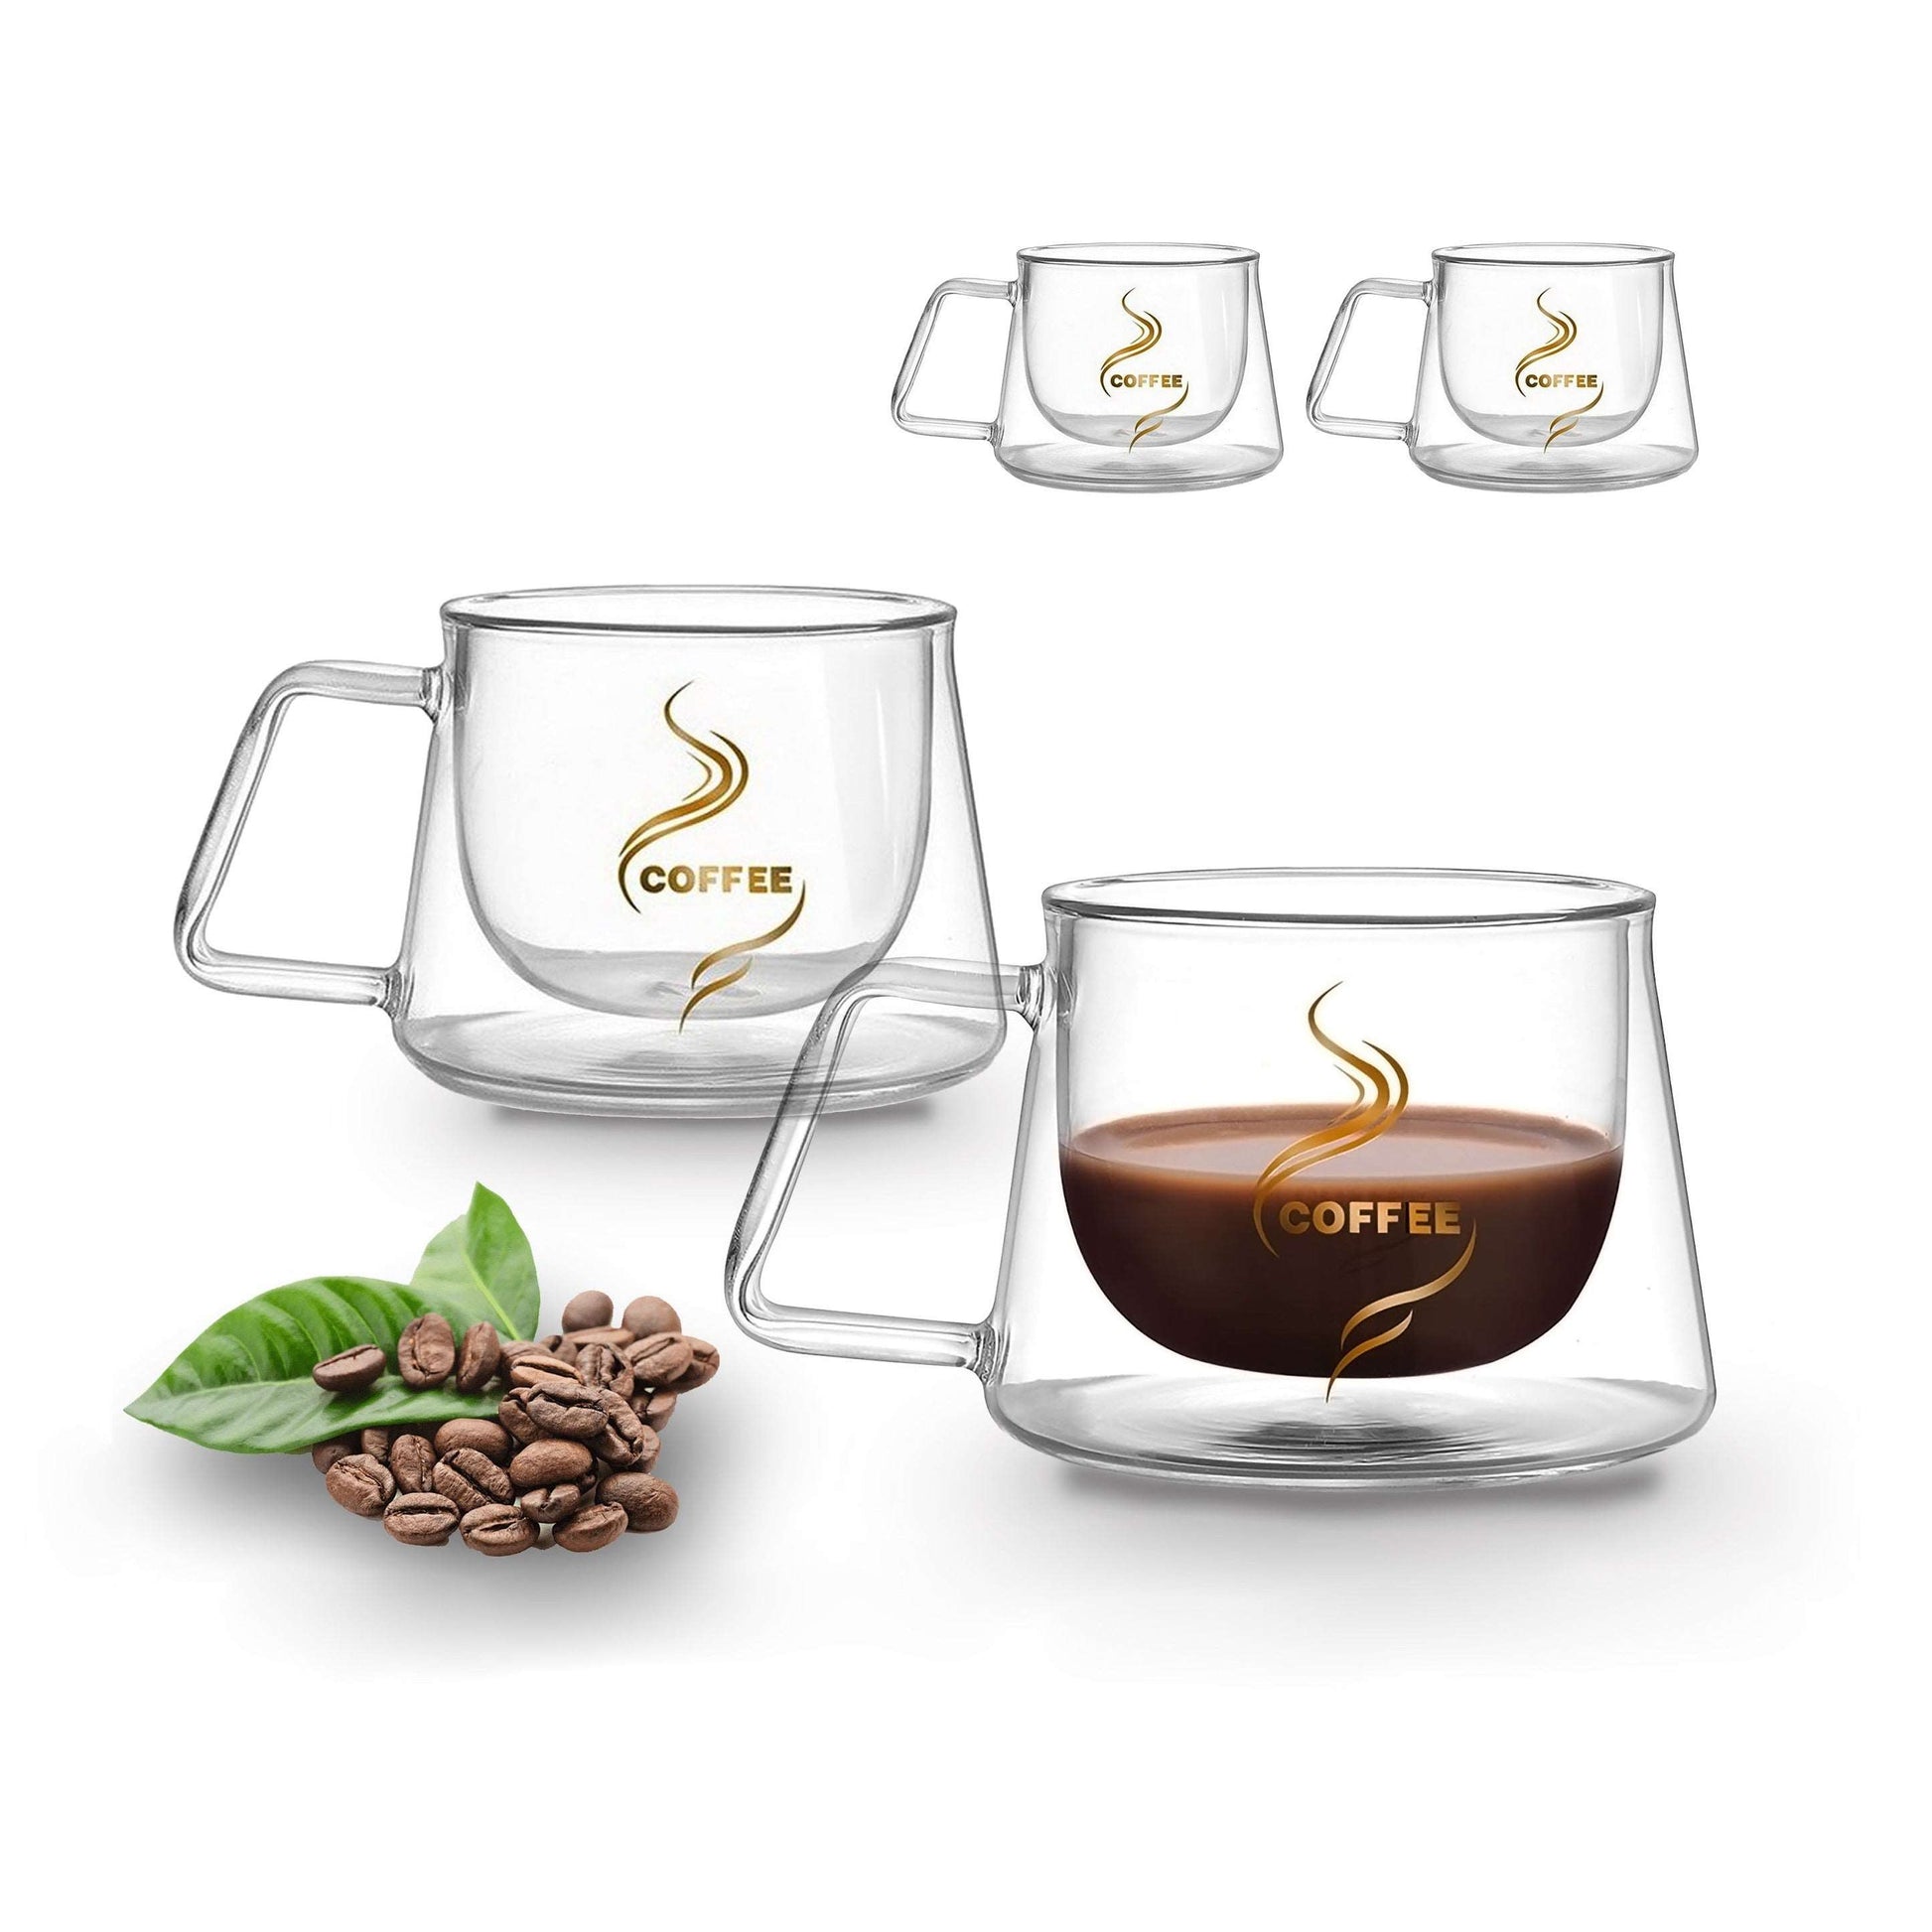 2 oz Espresso Glass Cups Set of 8, Double Wall Espresso Shot Glasses Clear  Mug